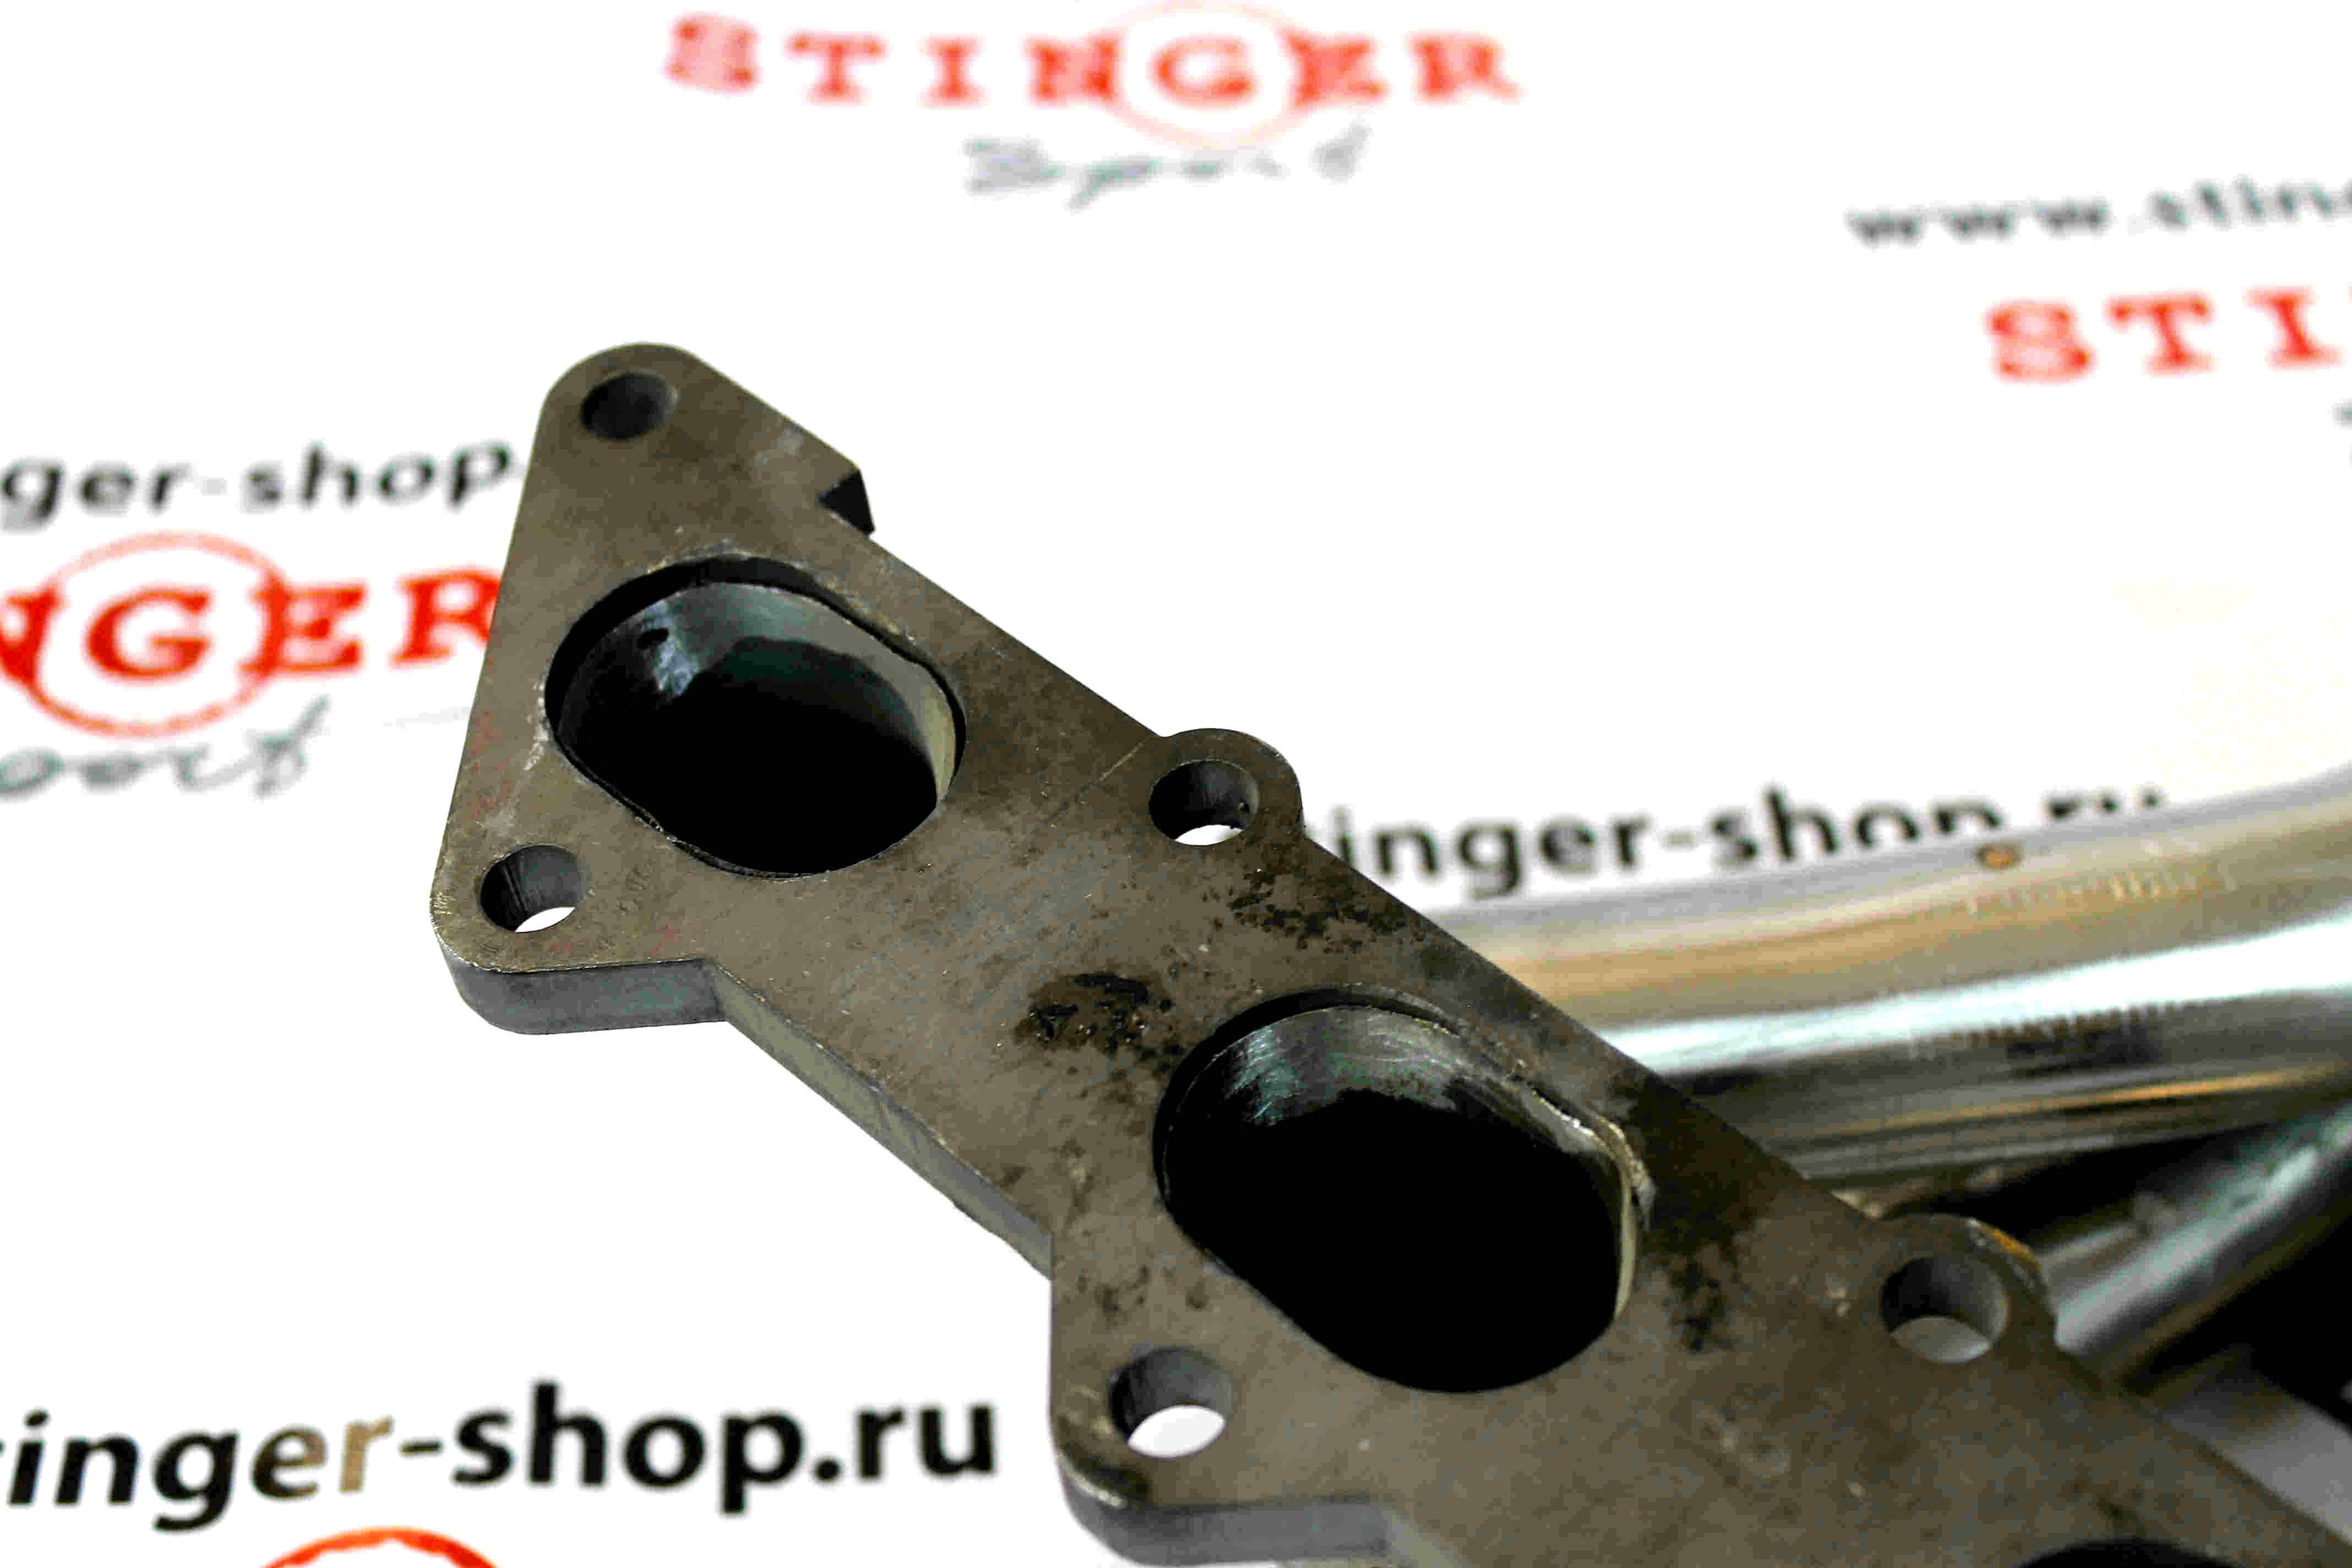 Вставка для замены катализатора "Stinger Sport" для а/м Chevrolet Cruze I 1.6L(F16D3) (2006-2015)  EGR (нержавеющая сталь). Фото �6